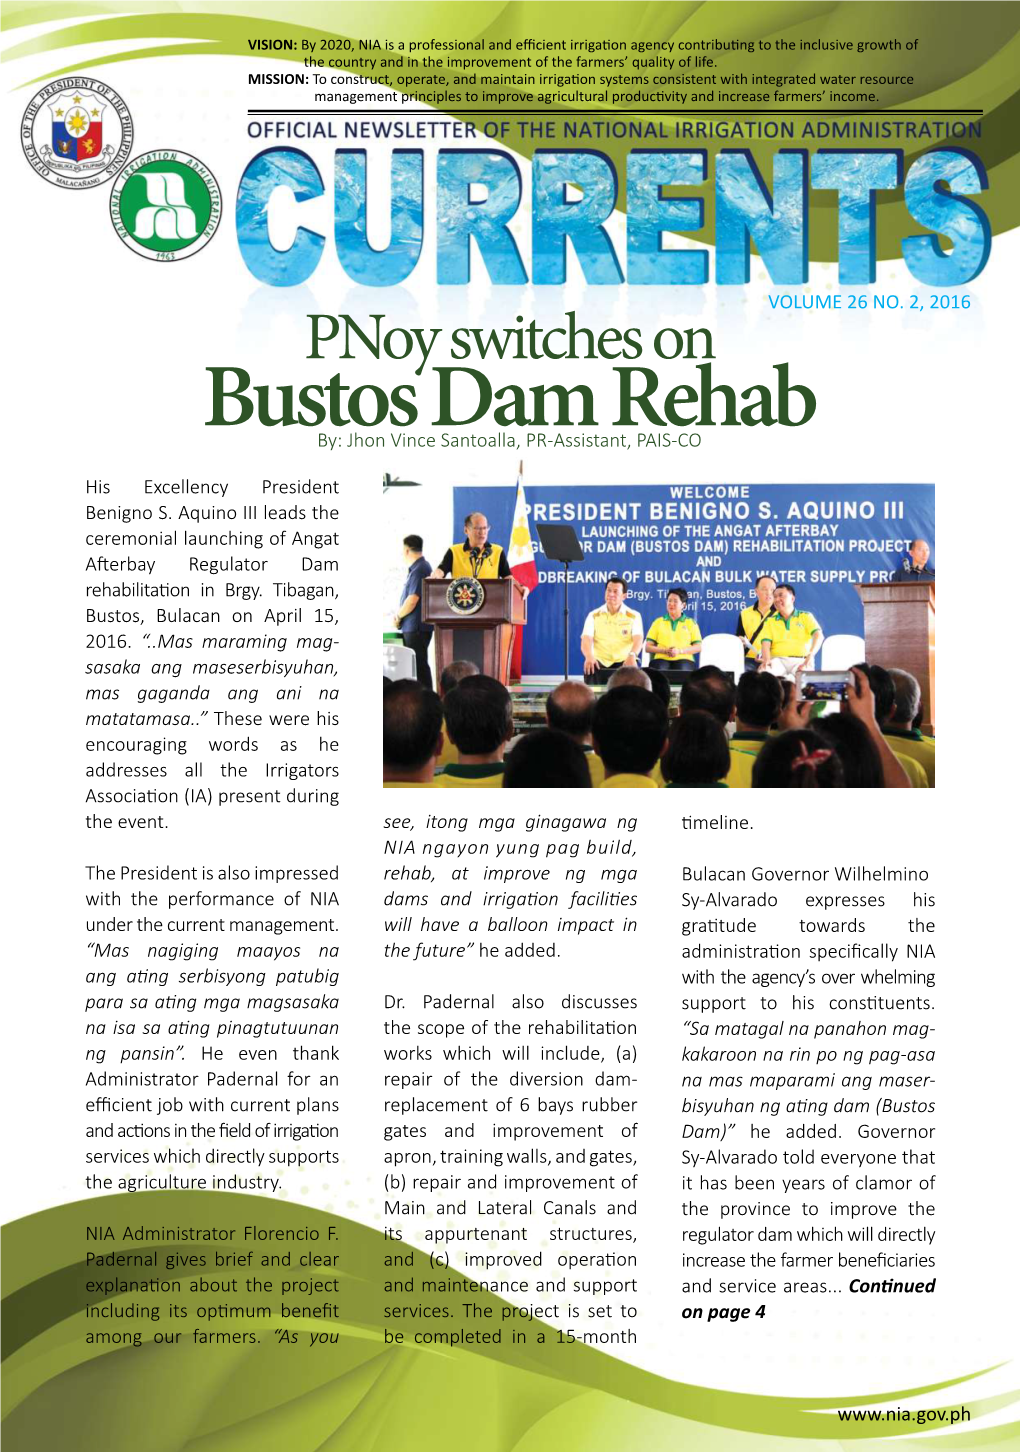 Bustos Dam Rehab